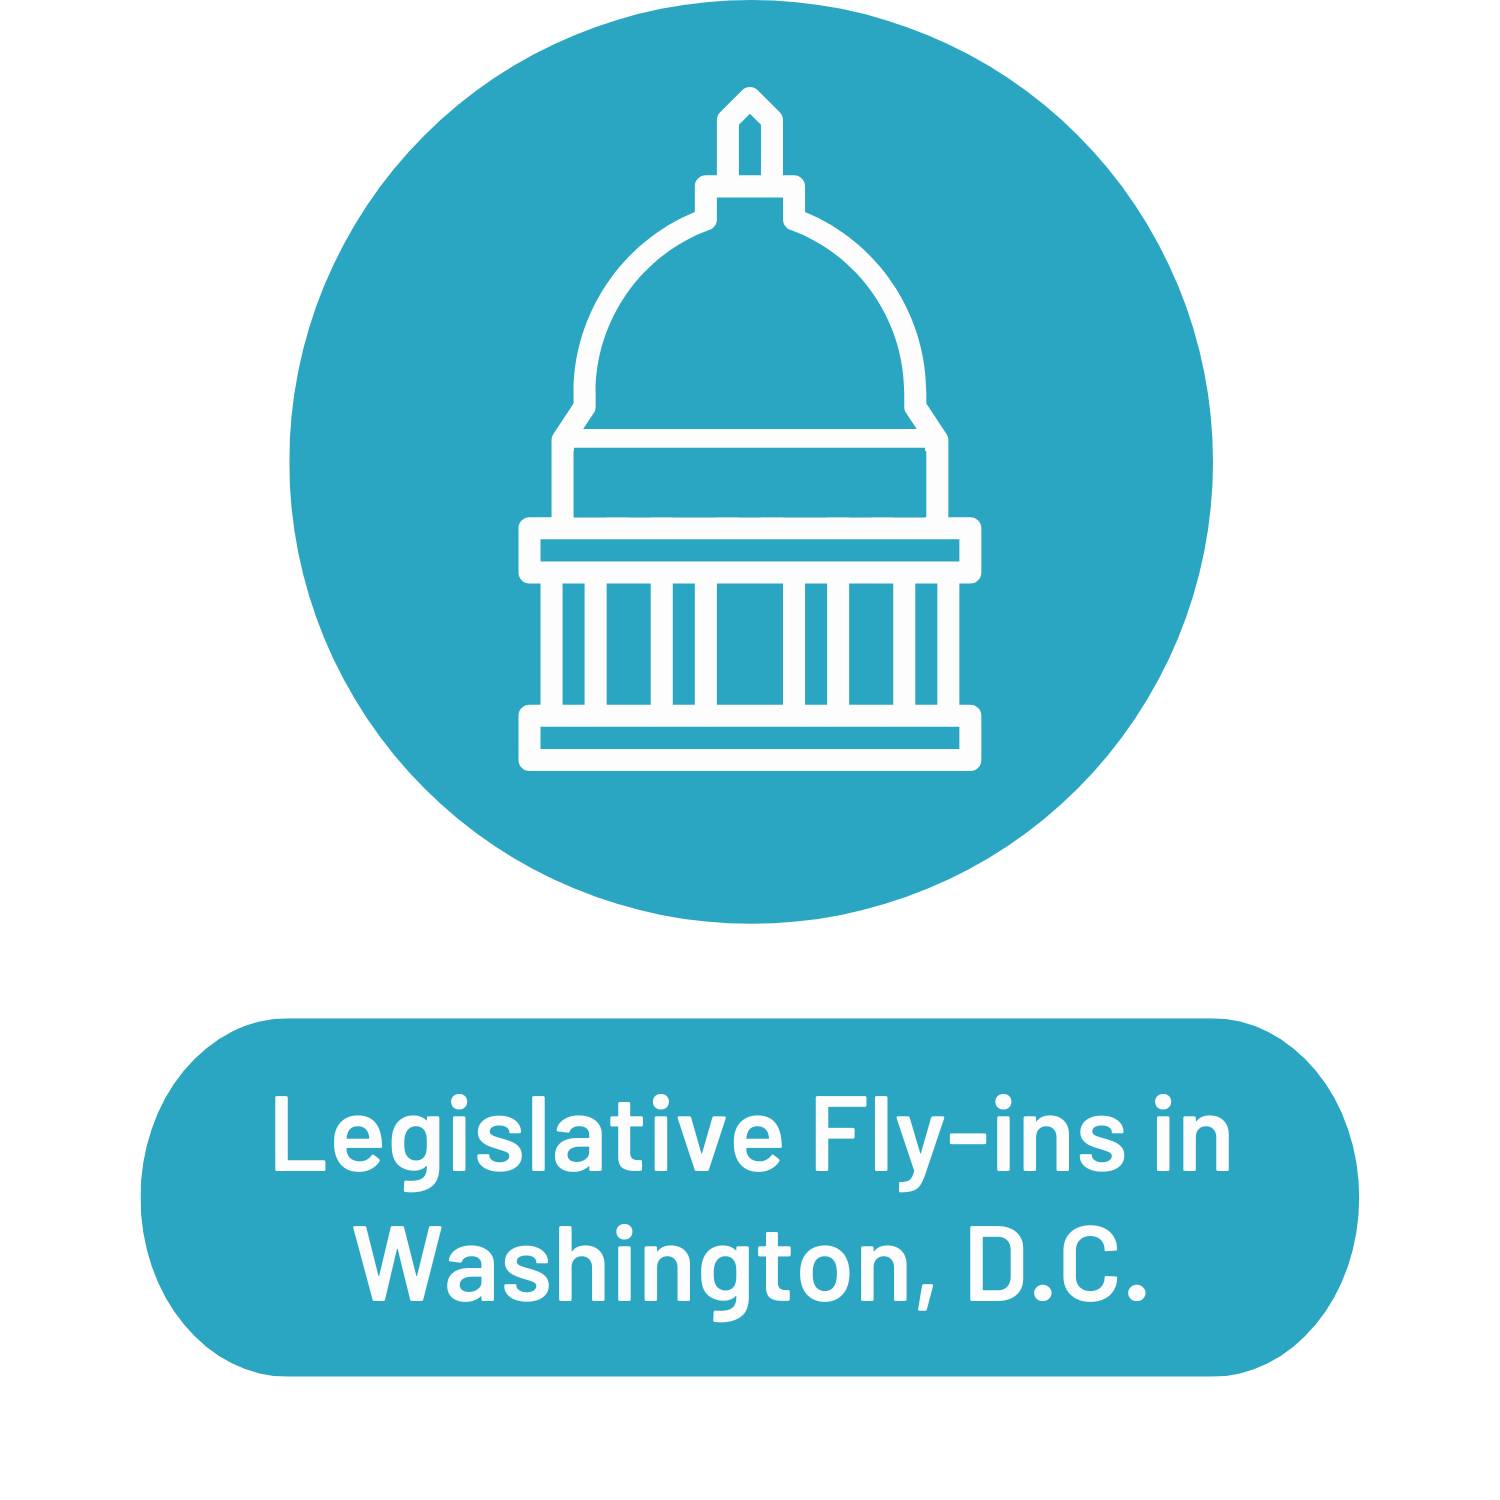 Legislative Fly-ins in Washington, D.C.